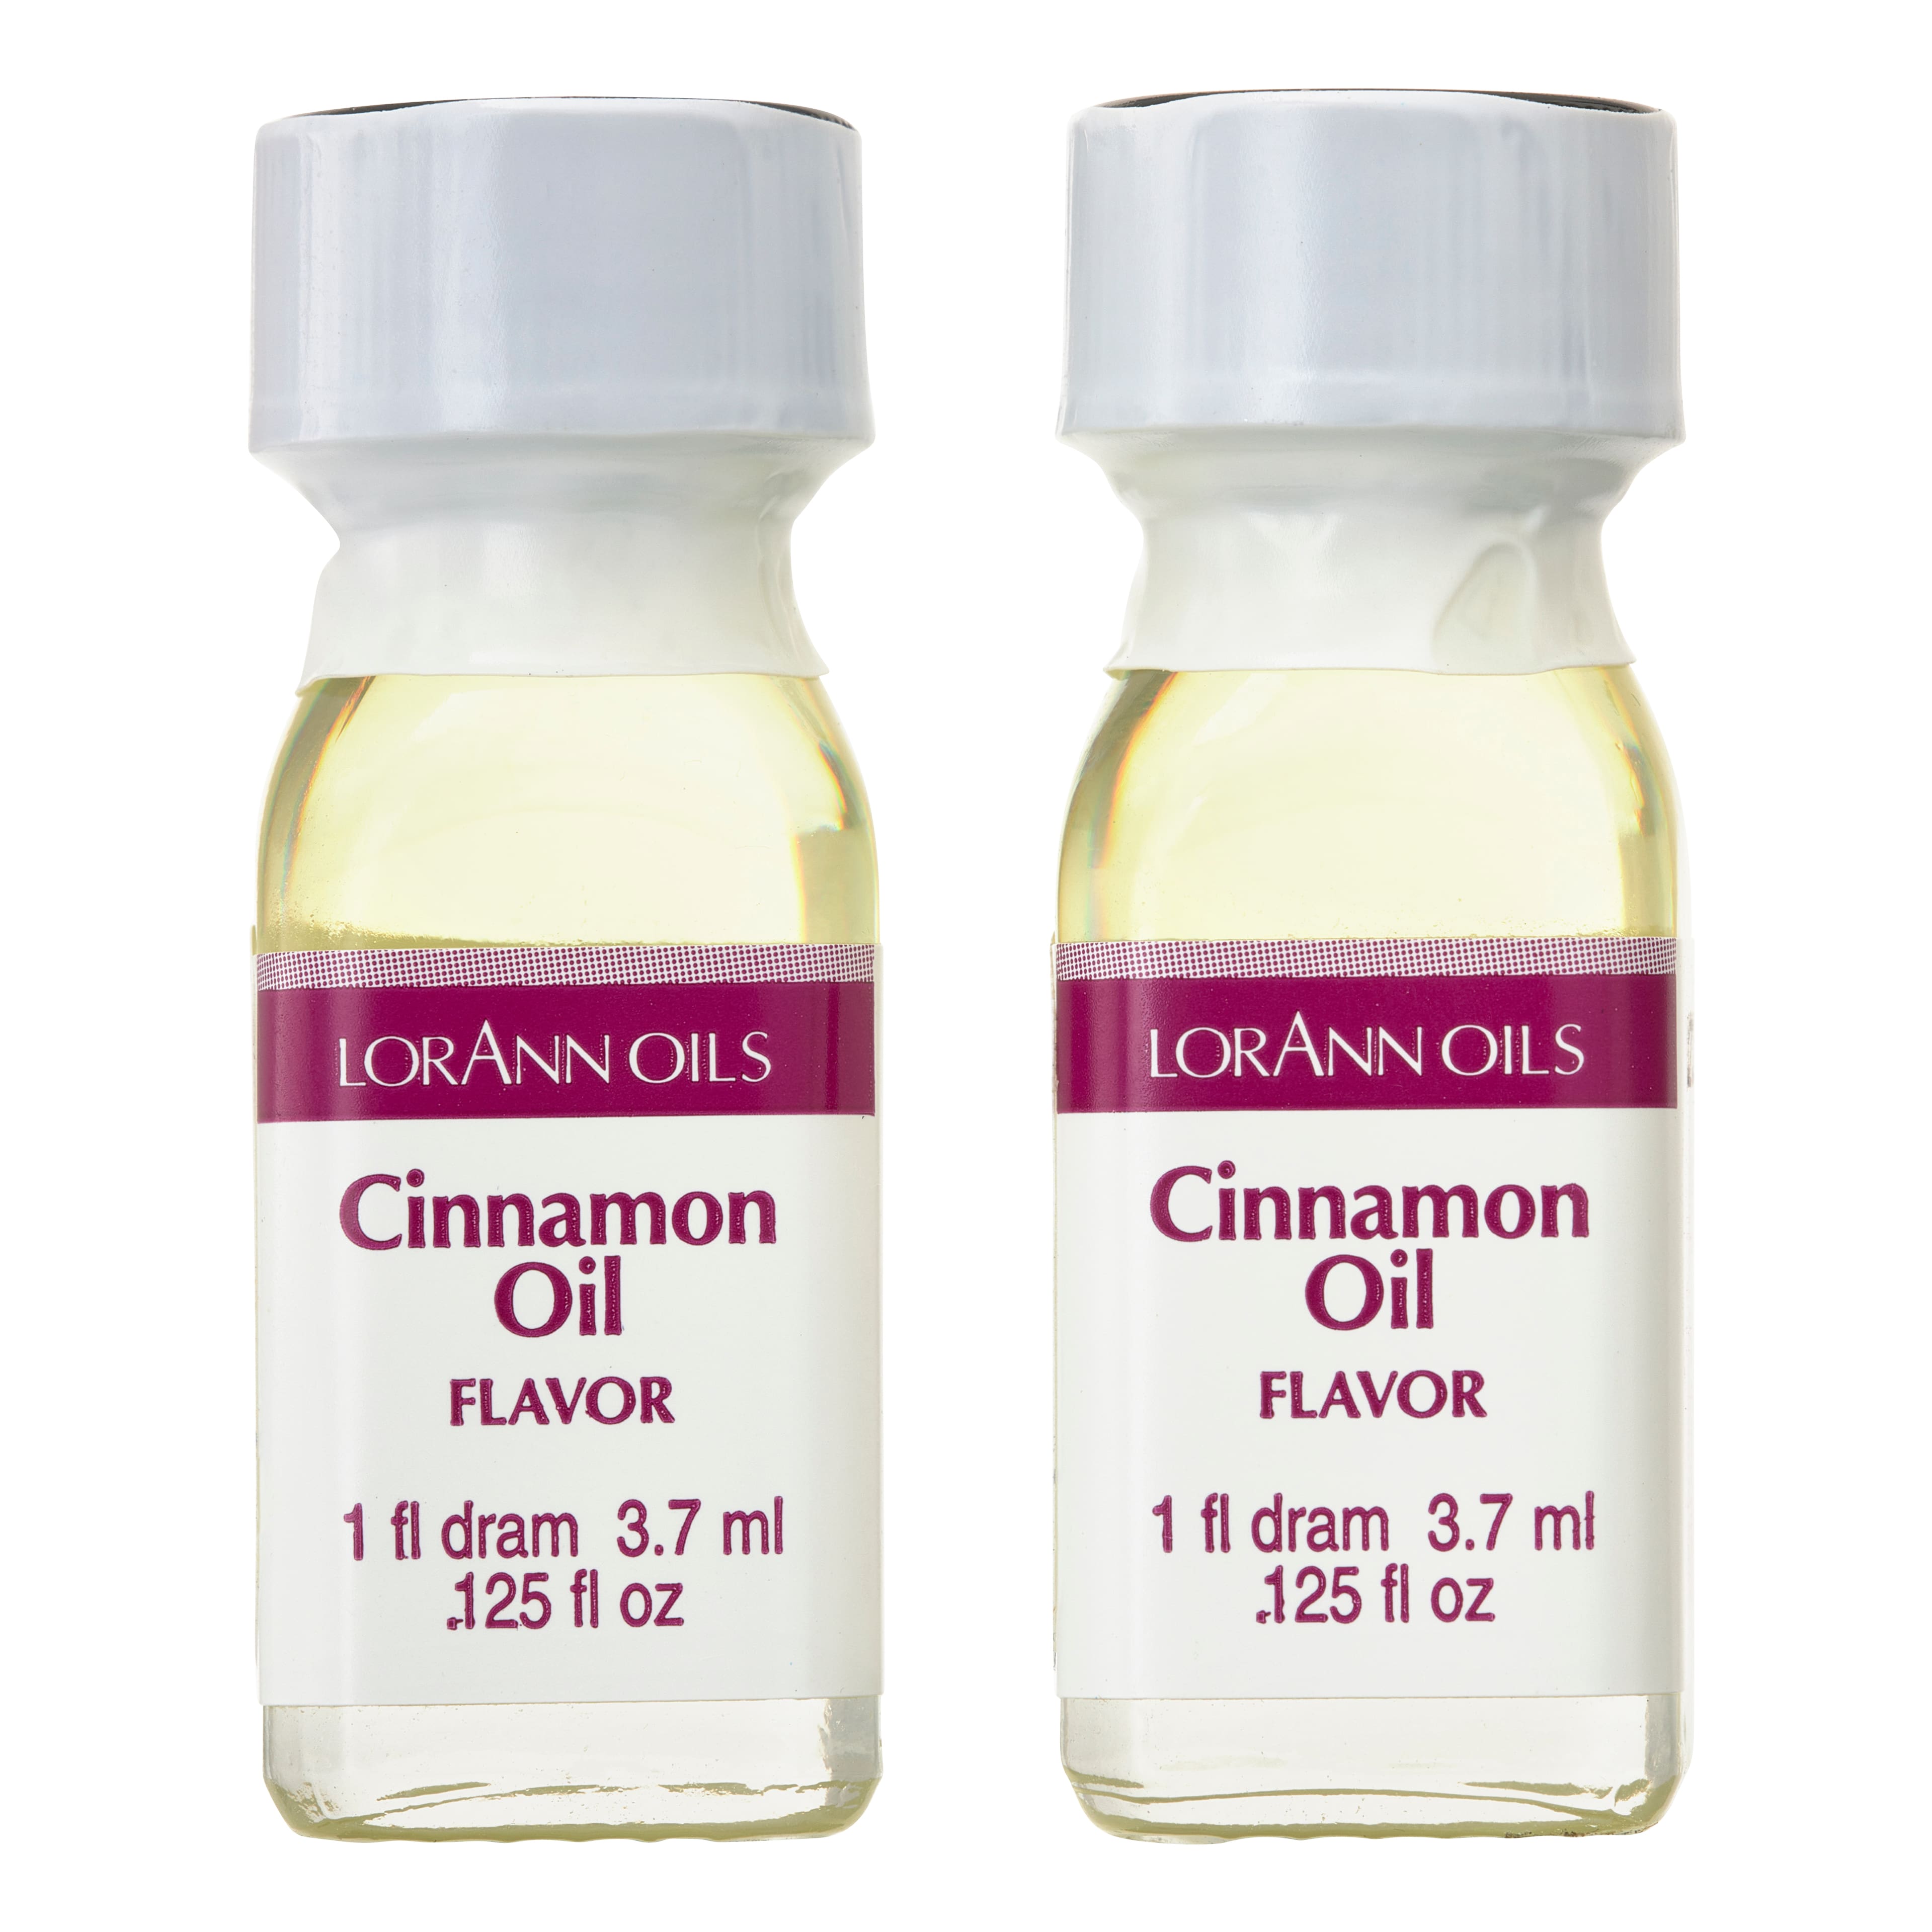 12 Packs: 2 ct. (24 total) LorAnn Oils Cinnamon Oil Flavor